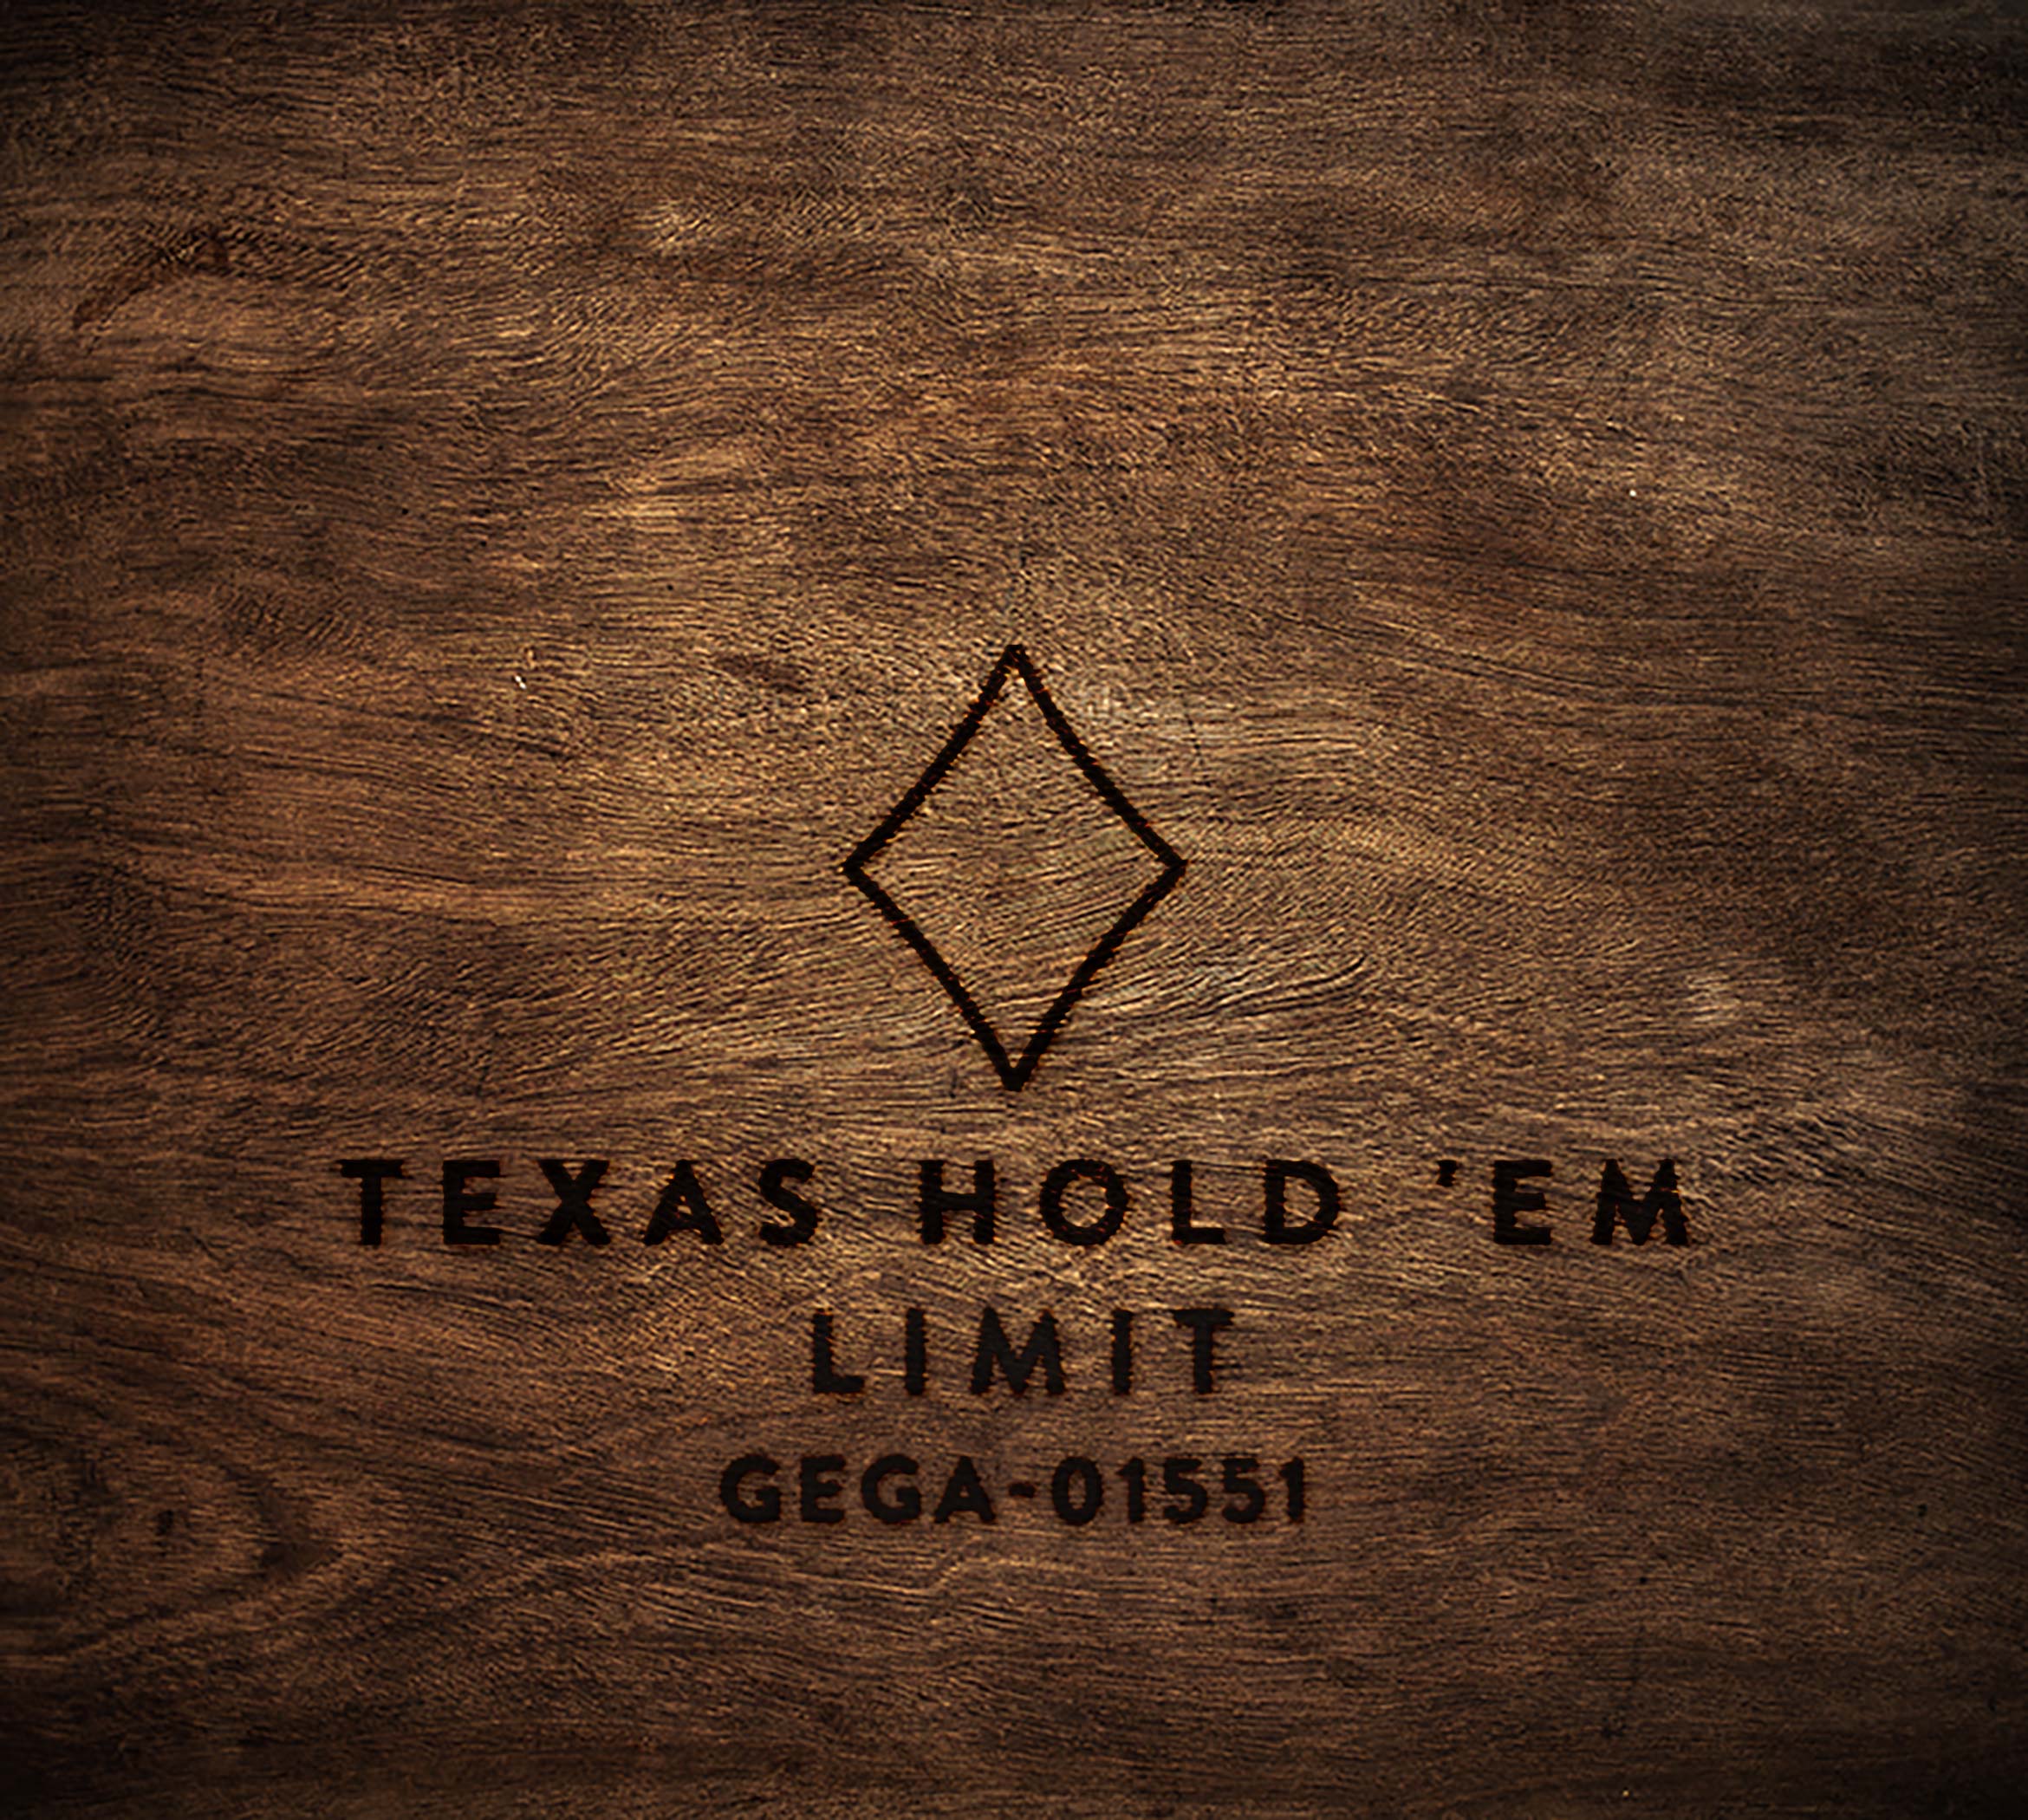 Texas Hold 'Em Limit GEGA-01551 wood square